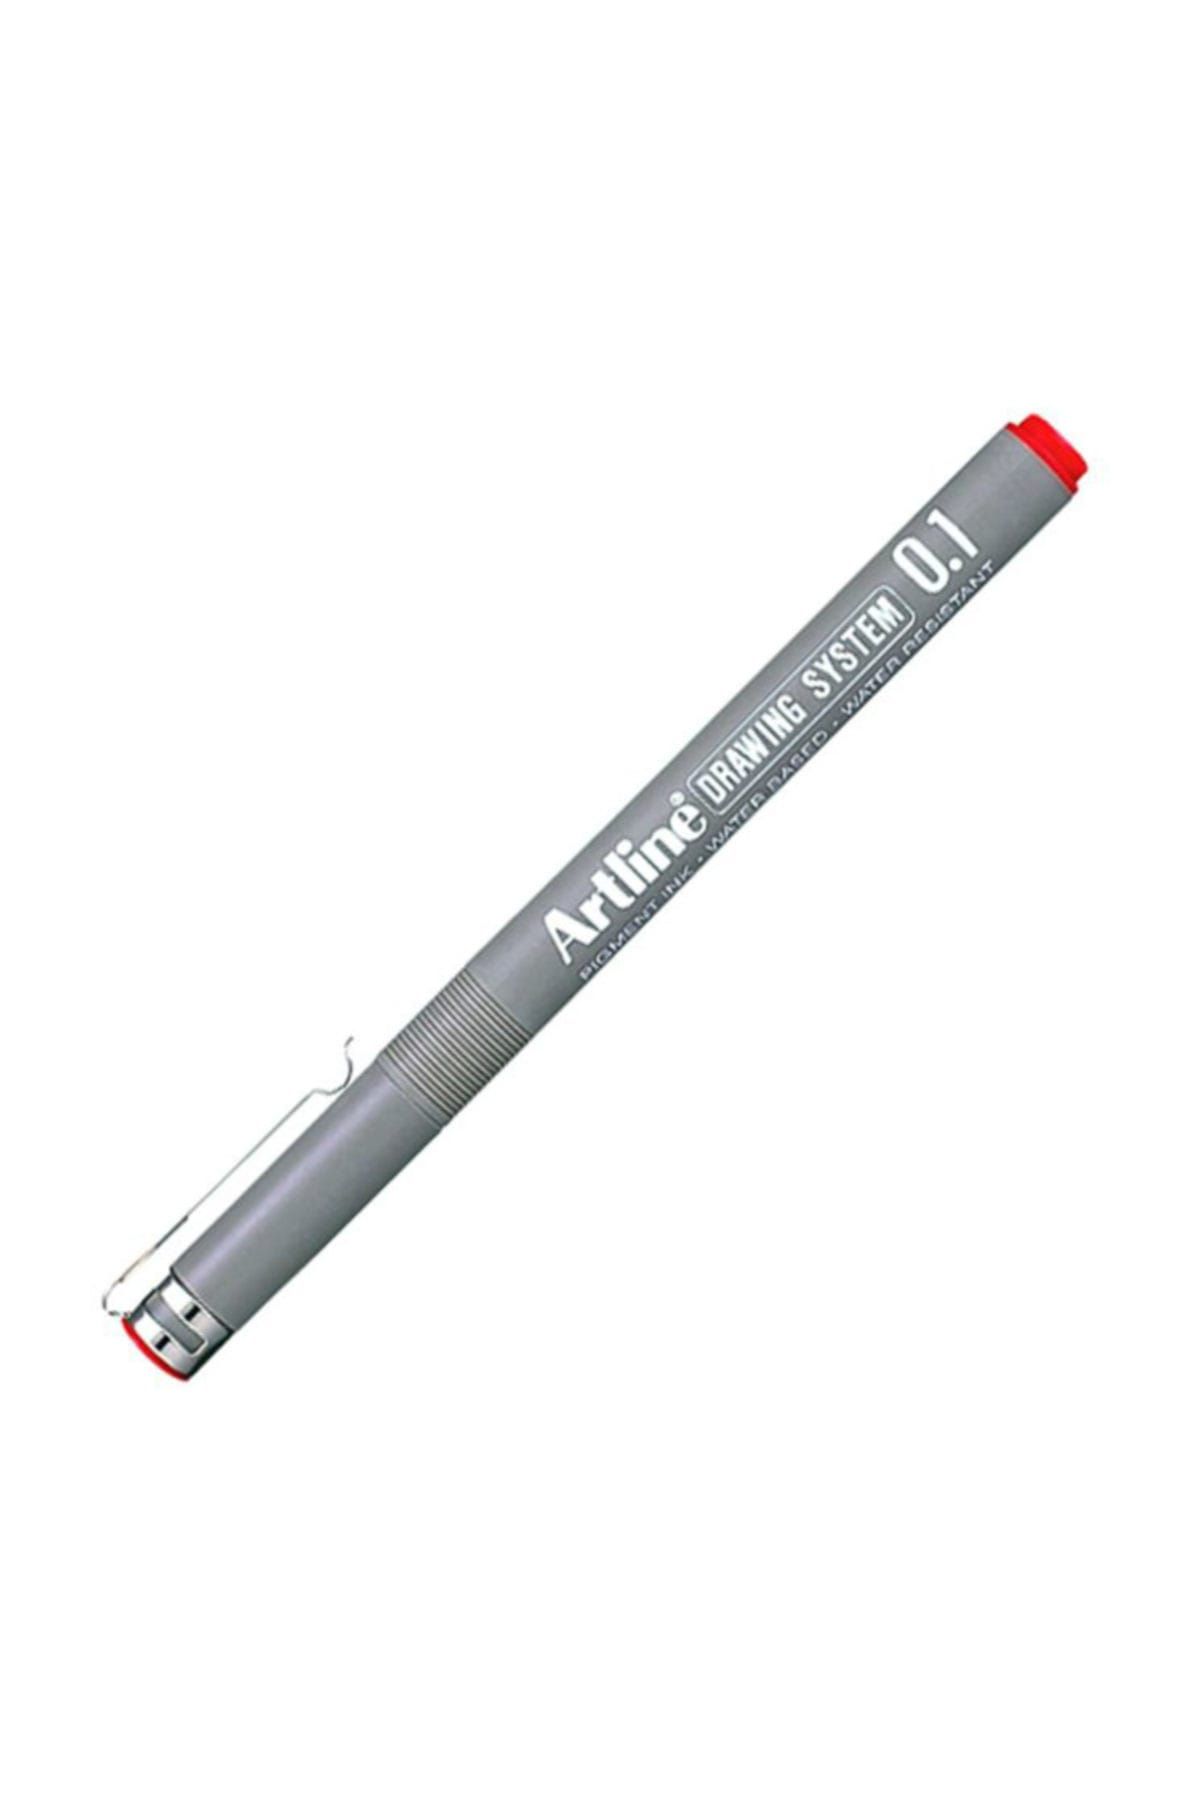 artline Drawing System 0.1 Çizim Kalemi Uç:0,1mm Kırmızı